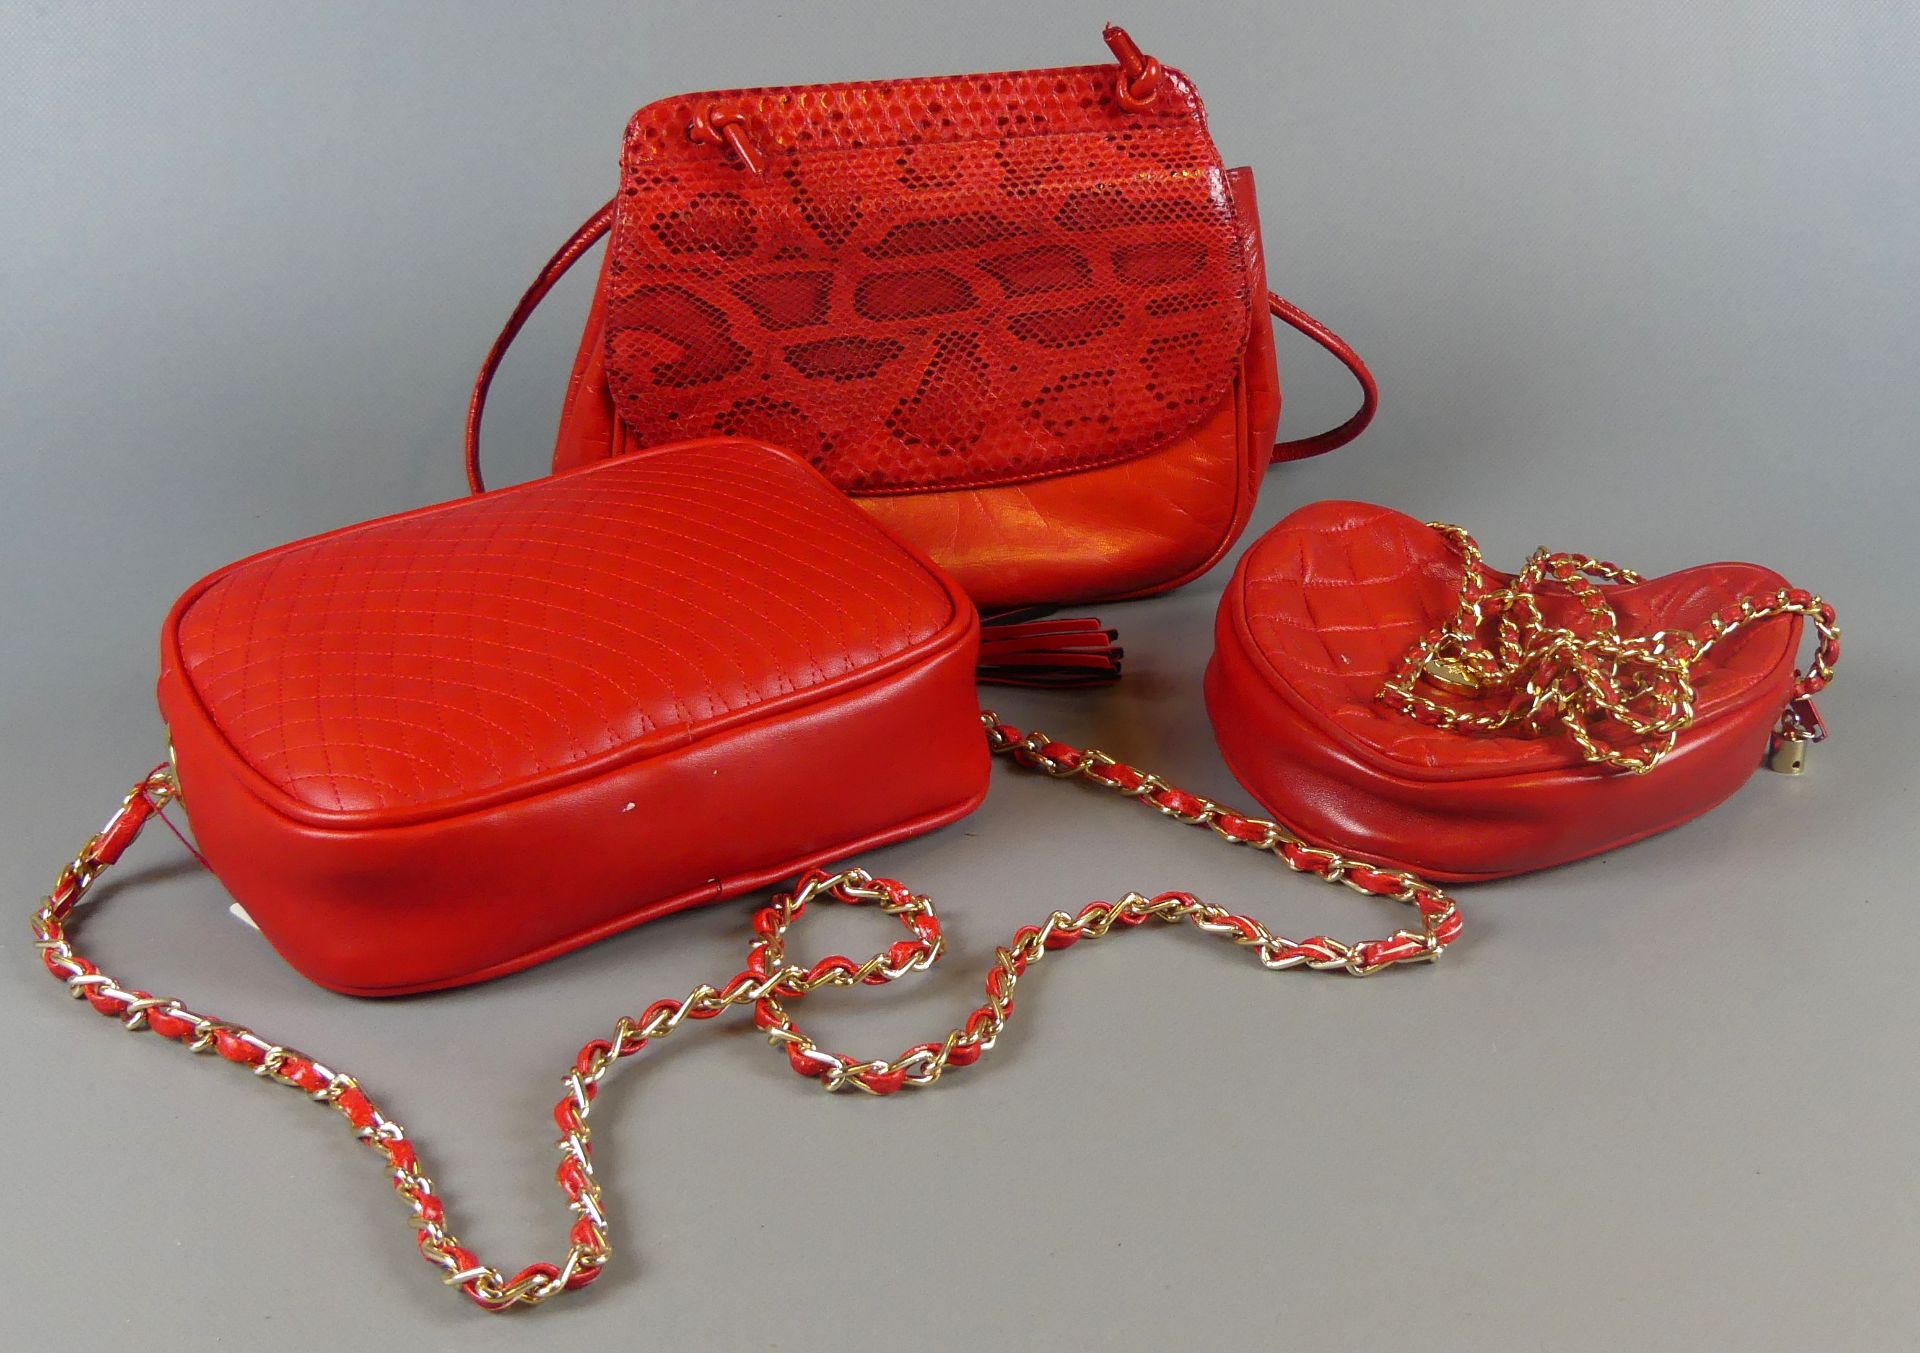 3 Damenhandtaschen, klein, Leder, verschieden Formen, rot, u.a.